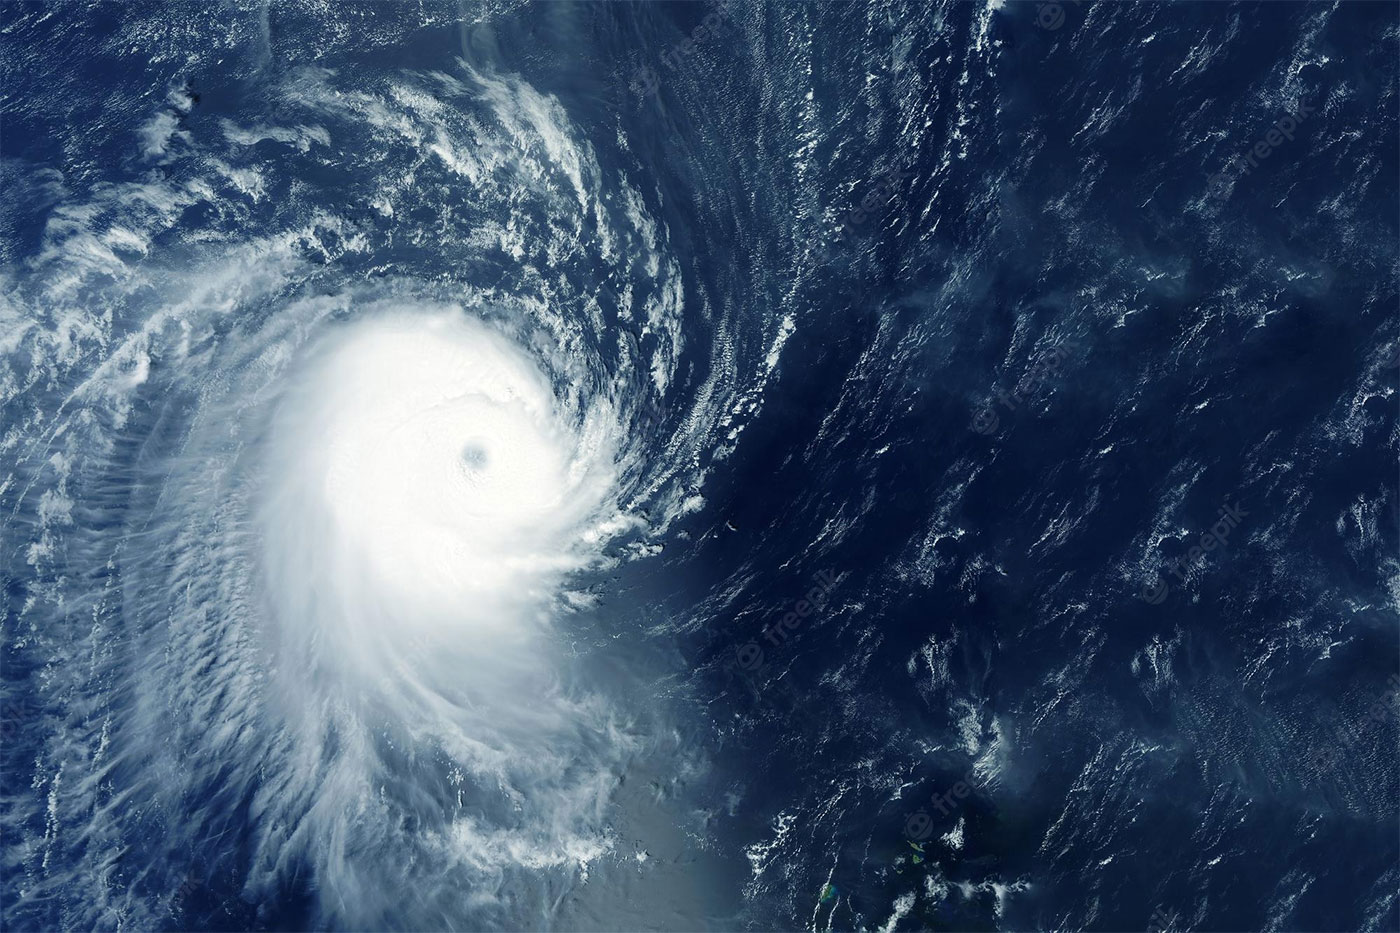 MRO Products Help with Hurricane Preparedness